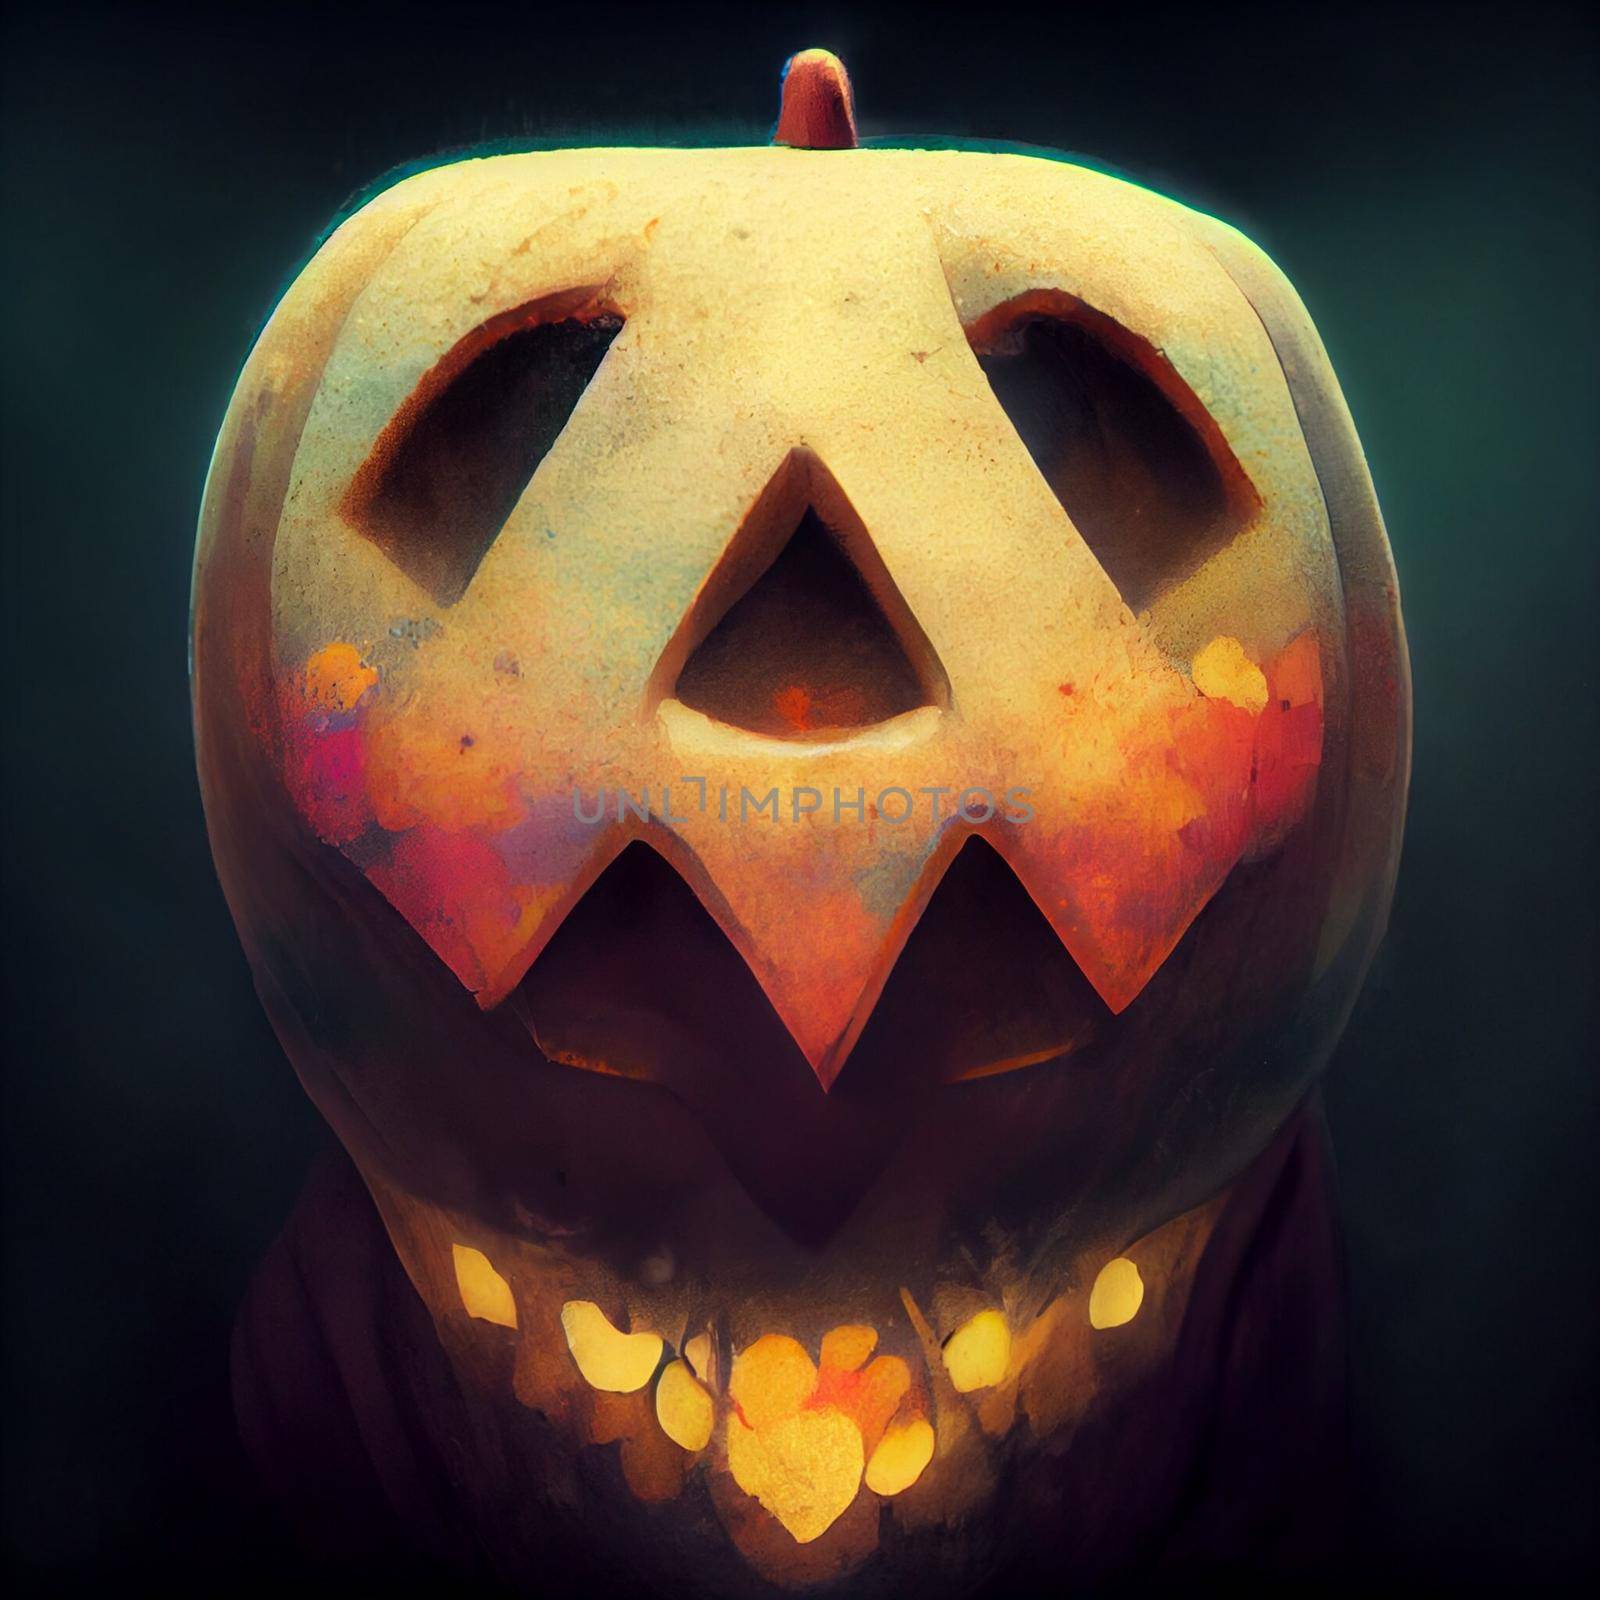 Cartoon illustration of a sinister Halloween pumpkin.